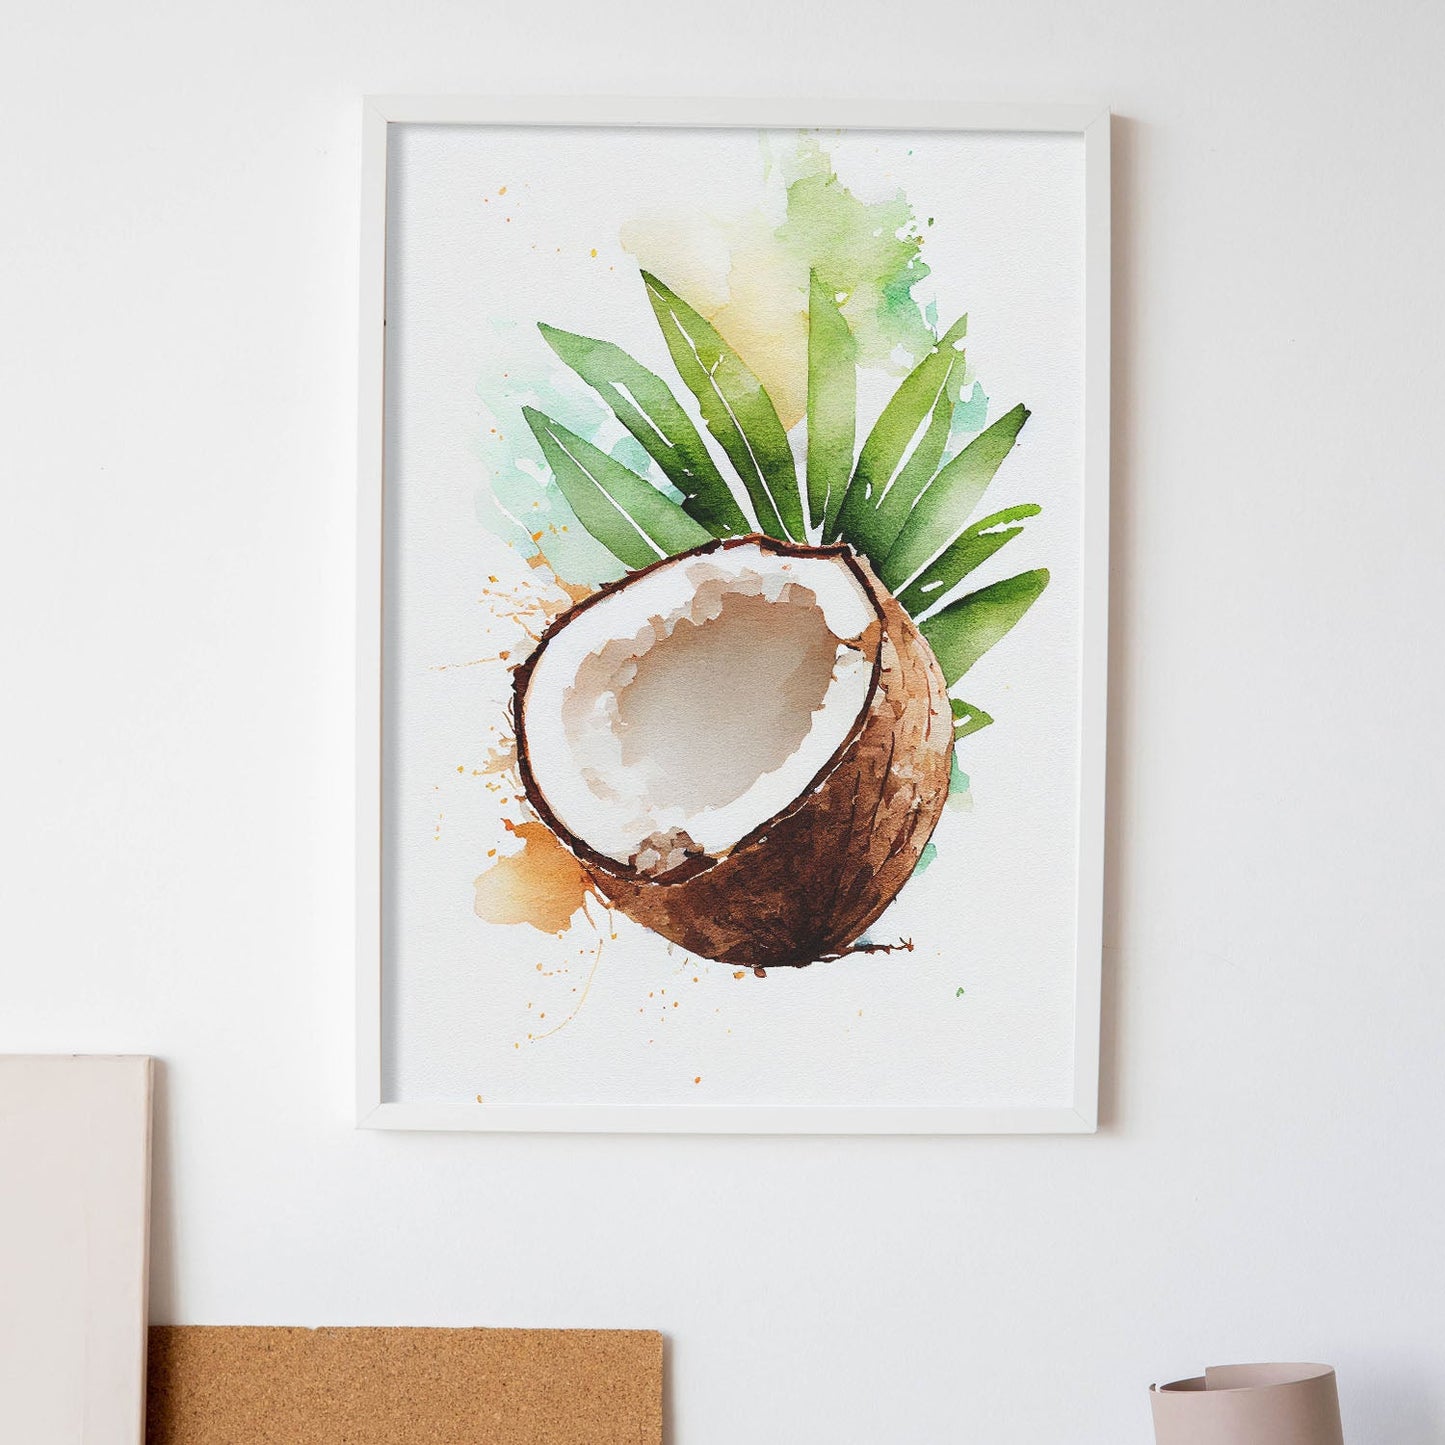 Nacnic minimalist Coconut_2. Aesthetic Wall Art Prints for Bedroom or Living Room Design.-Artwork-Nacnic-A4-Sin Marco-Nacnic Estudio SL